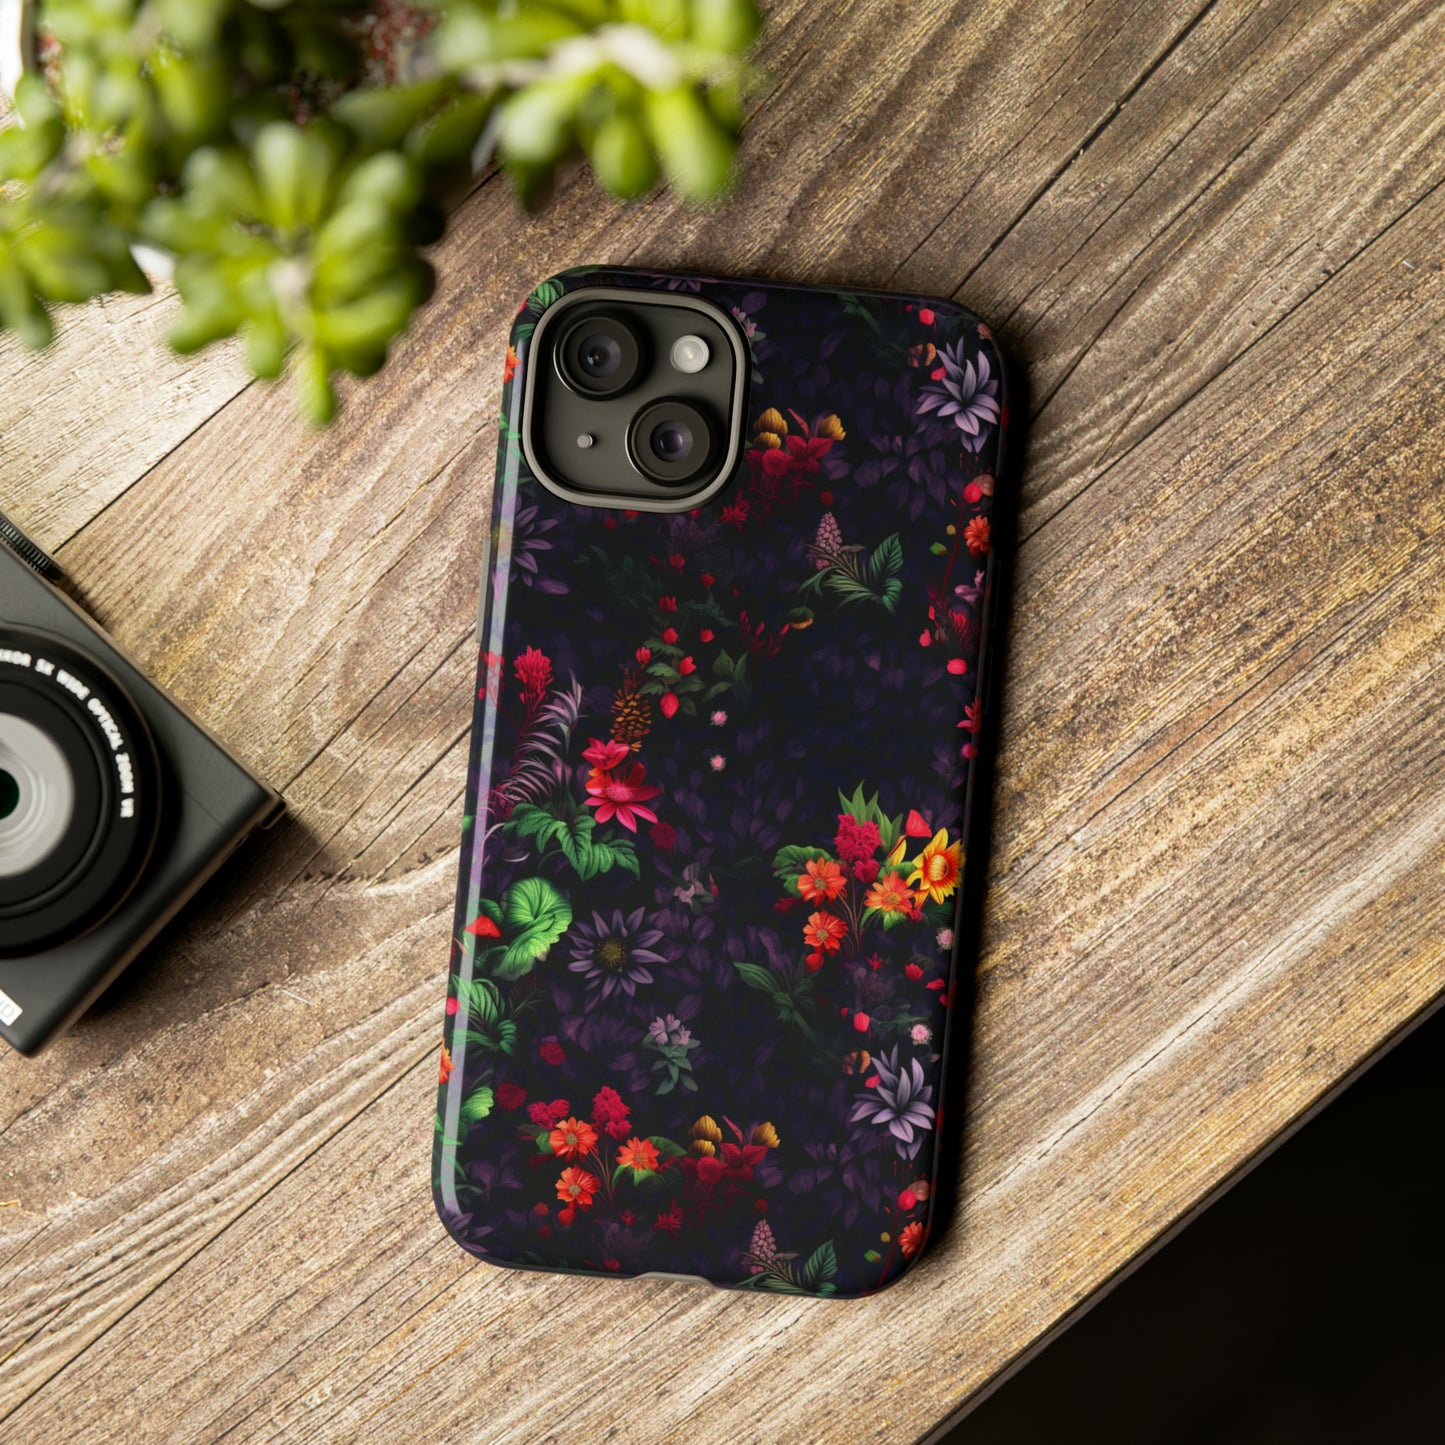 Neduz Designs Artified Floral Print Tough Cases - Premium Protection for Smartphones